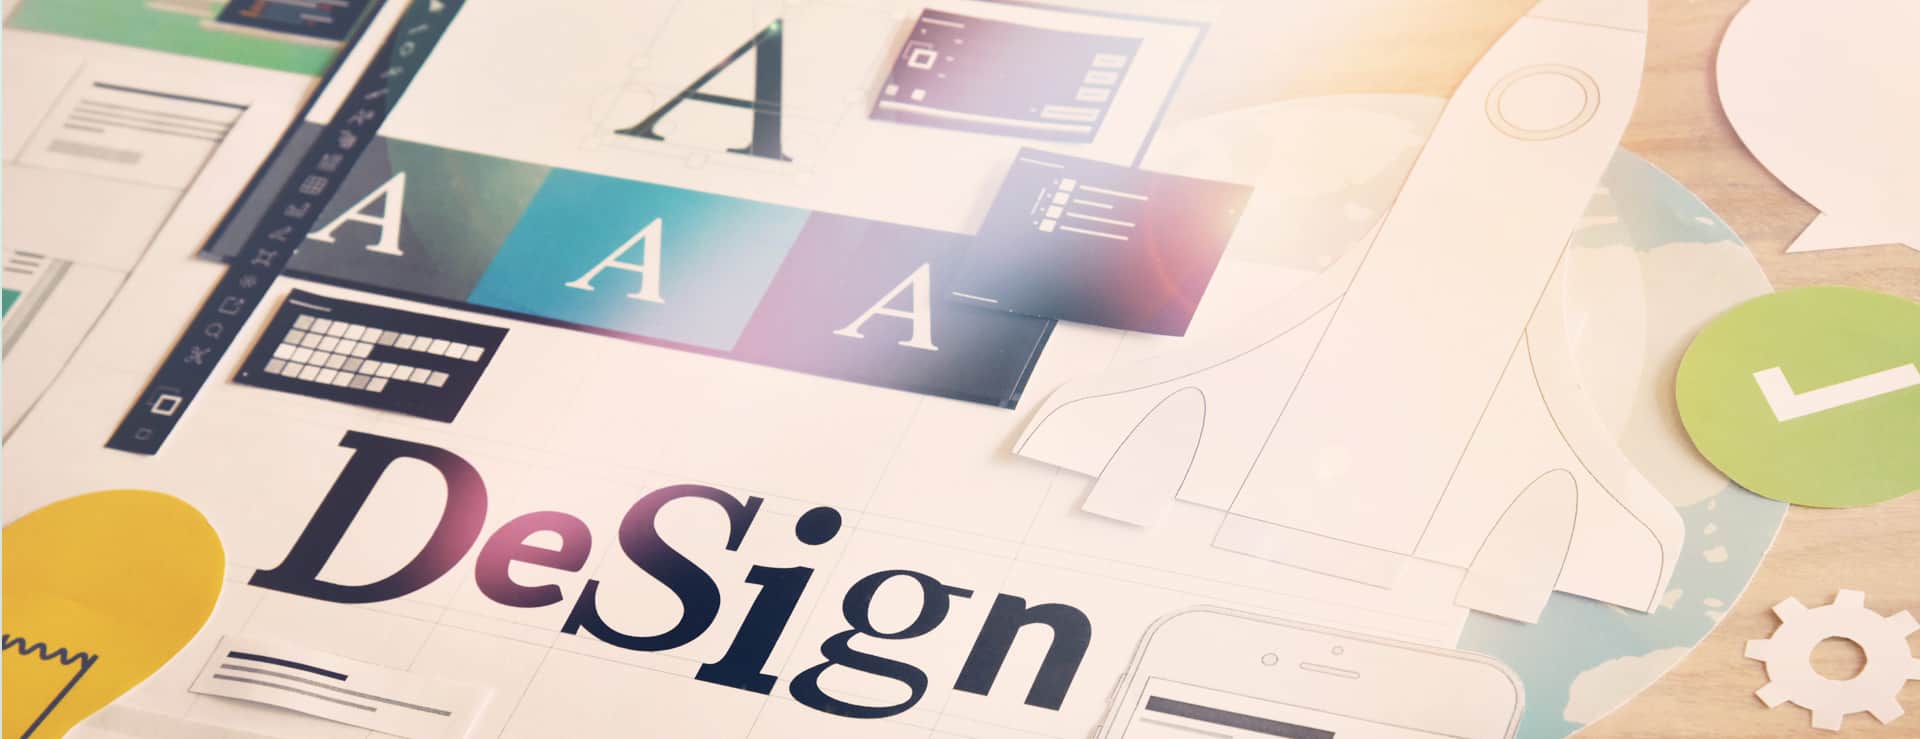 Studio Brandmerk grafisch ontwerp en webdesign